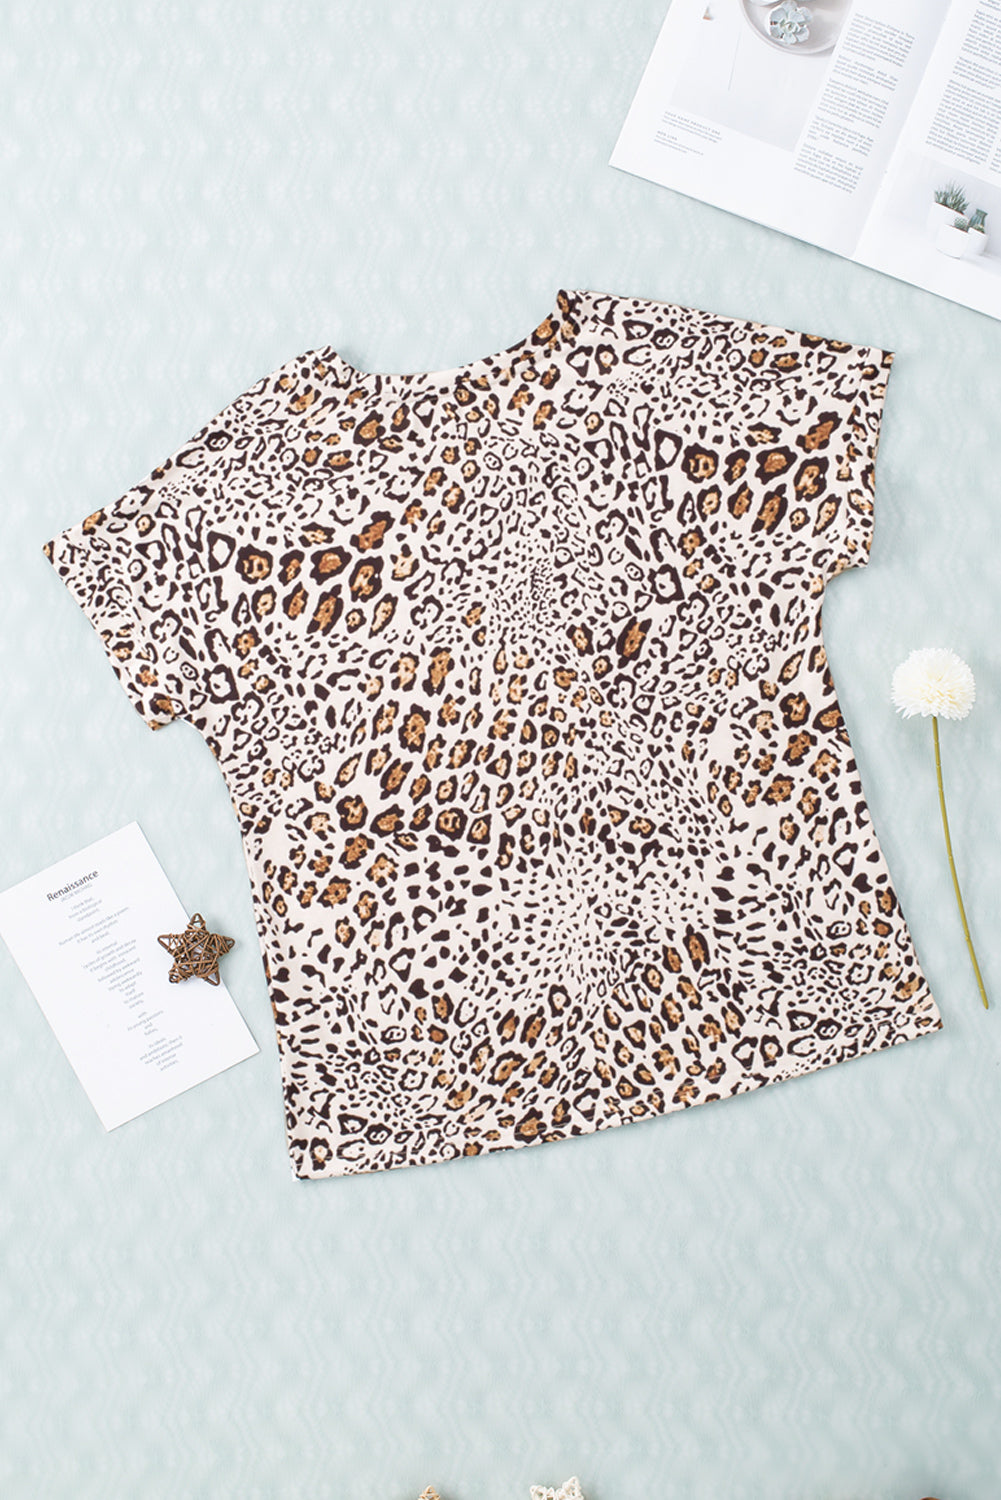 Leopard V-Neck Short Sleeve Tee Shirt Print on any thing USA/STOD clothes